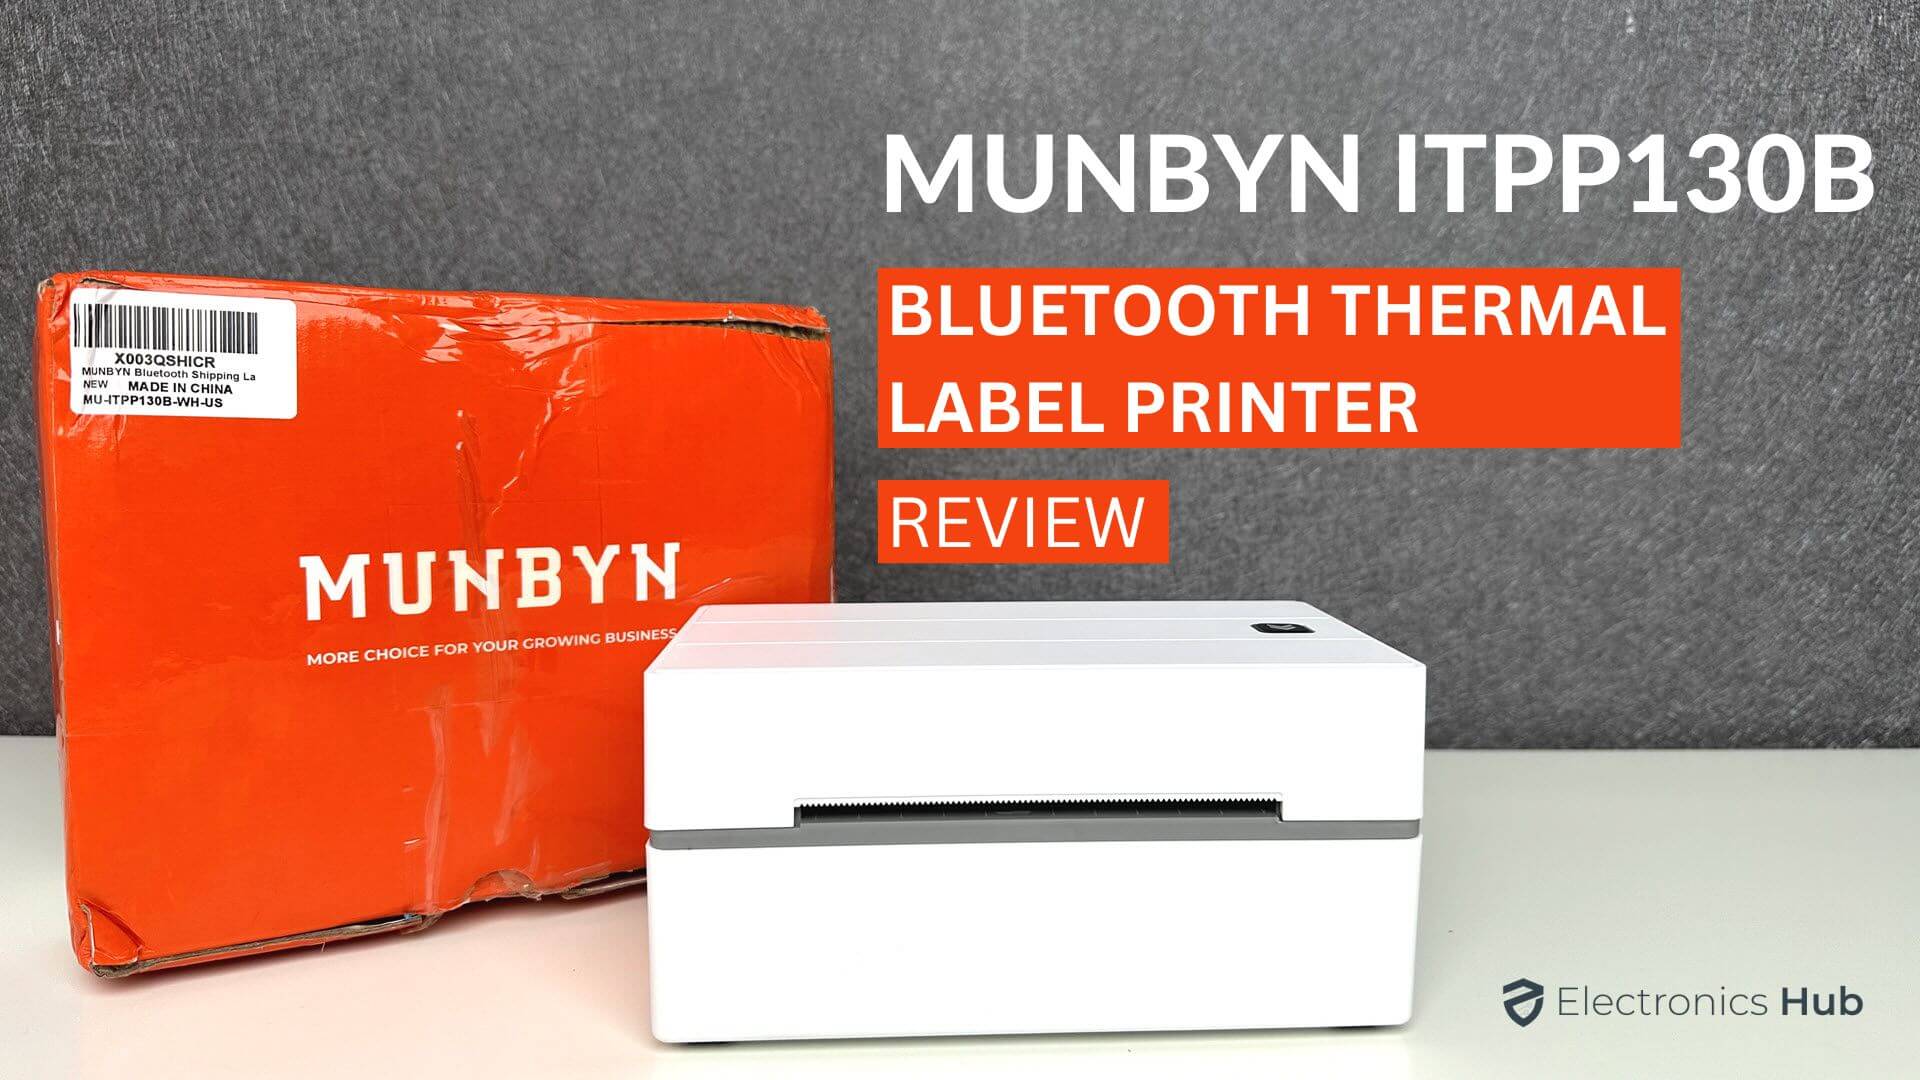 MUNBYN ITPP130B Bluetooth Thermal Label Printer Review - ElectronicsHub